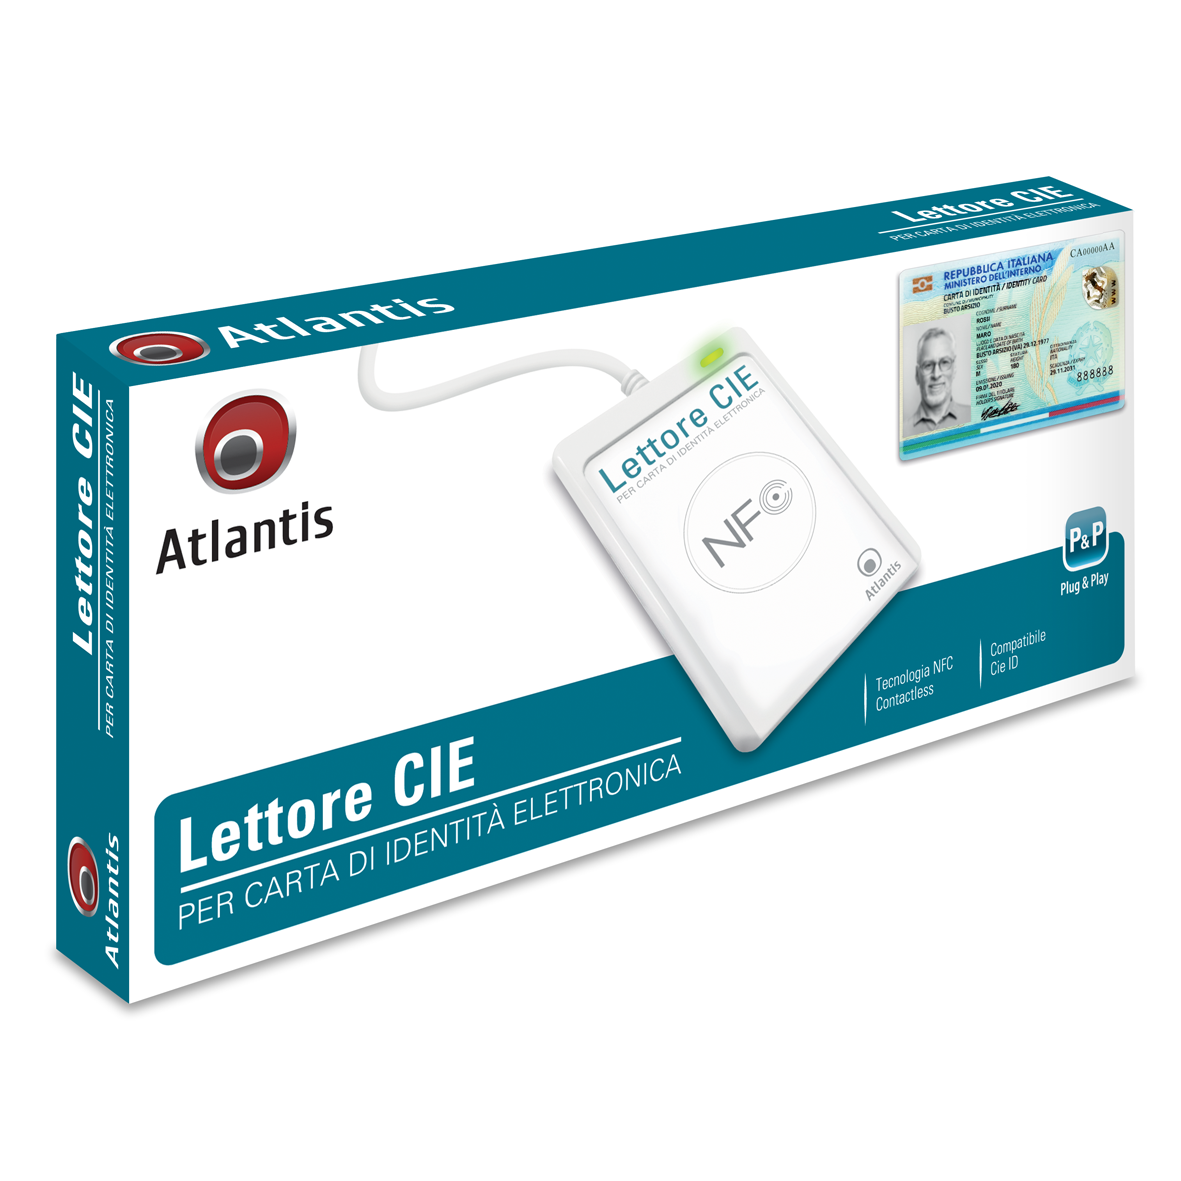 Atlantis Atlantis P005-CIEA211 Lettore Cie 3.0 Usb Nfc Per Carta Di Identita' Elettronica 